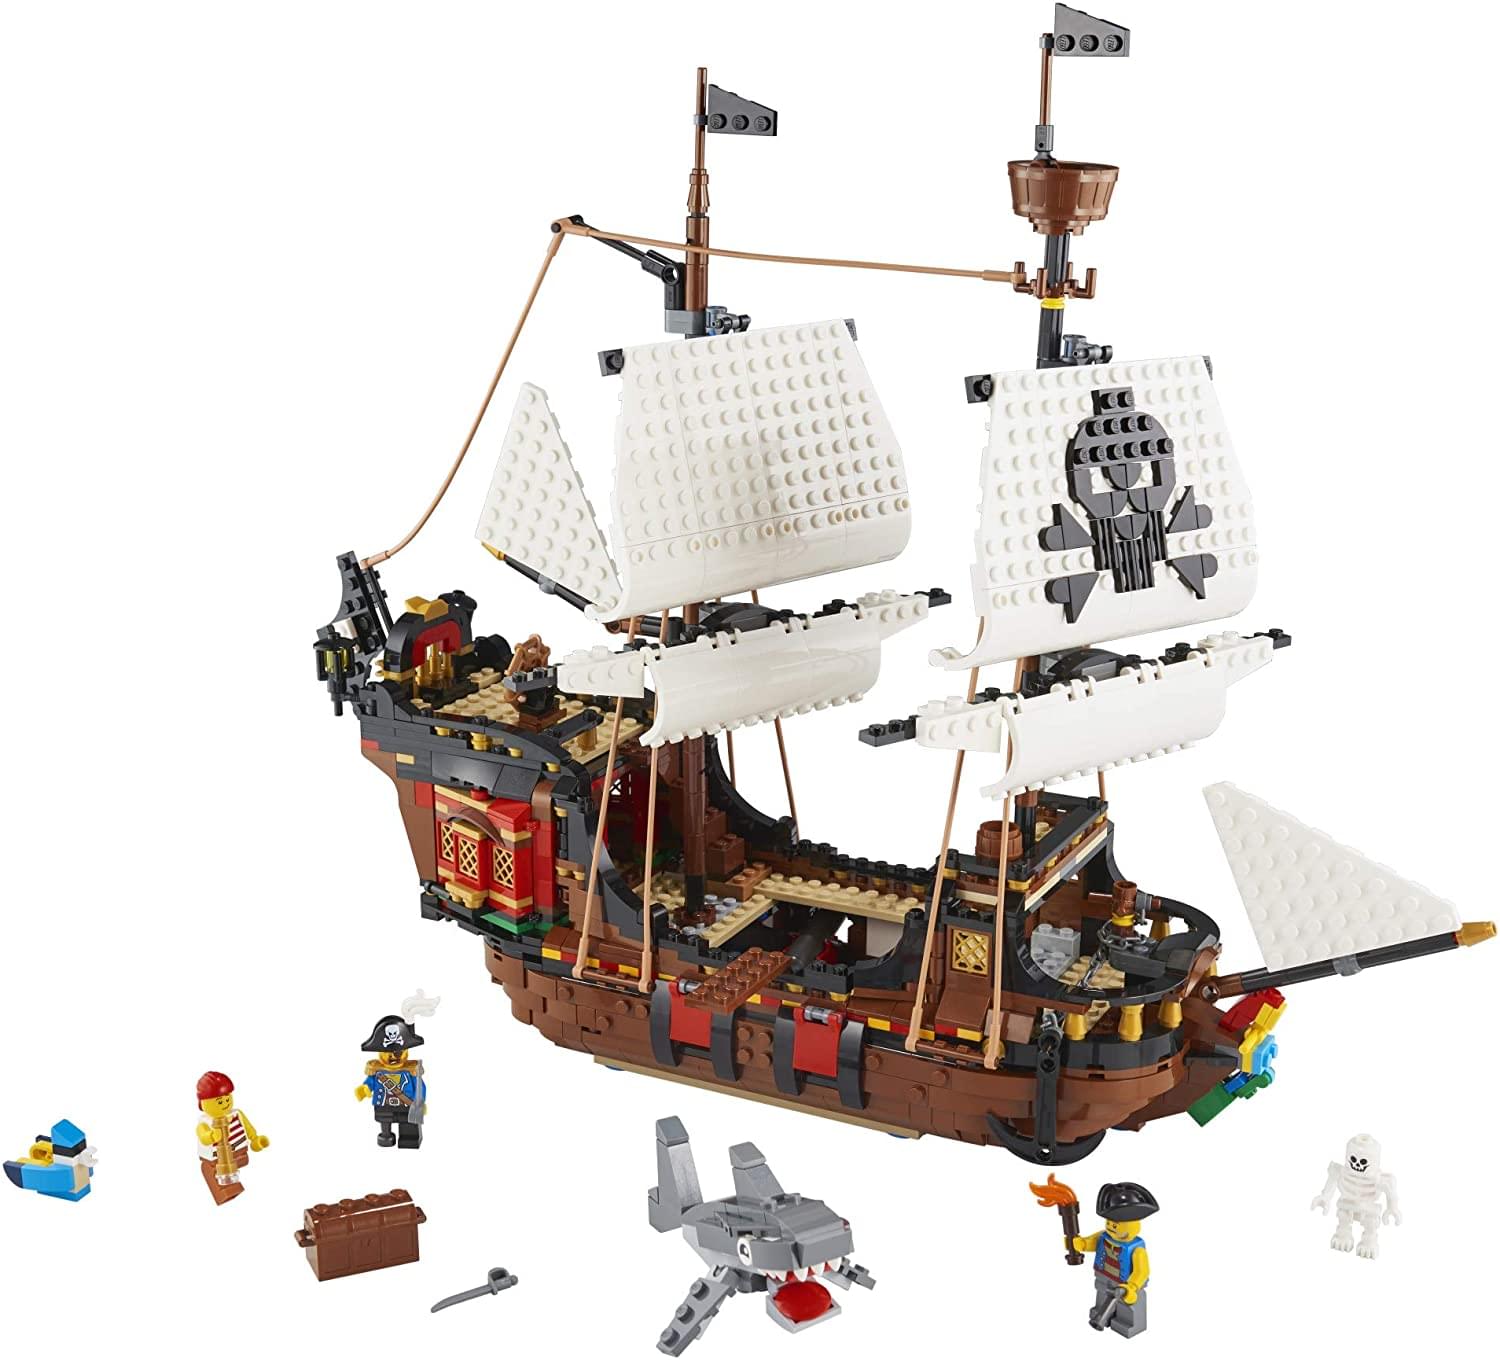 LEGO Creator 3in1 Pirate Ship 31109 | 1264 Piece Building Kit